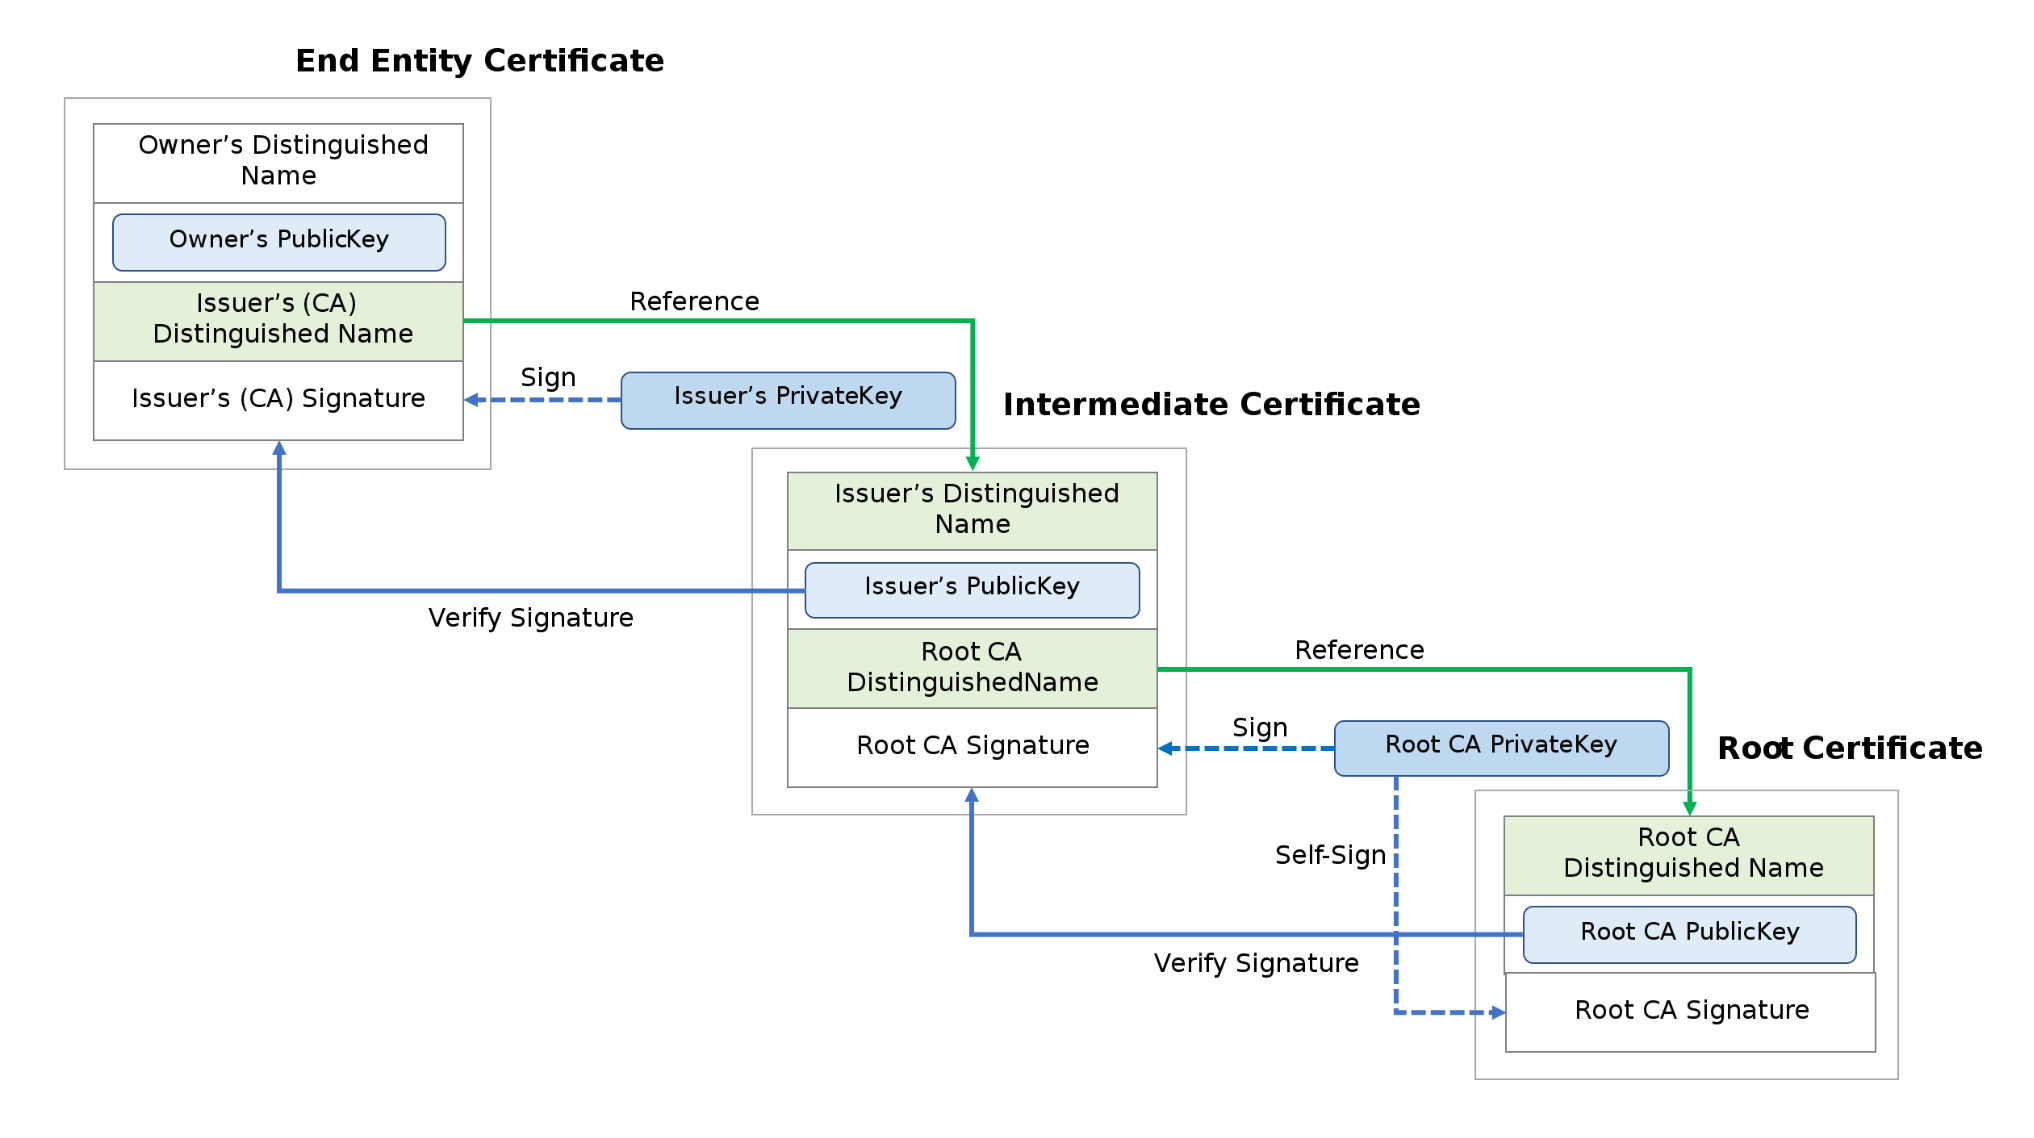 Certificate Chain of Trust in detail